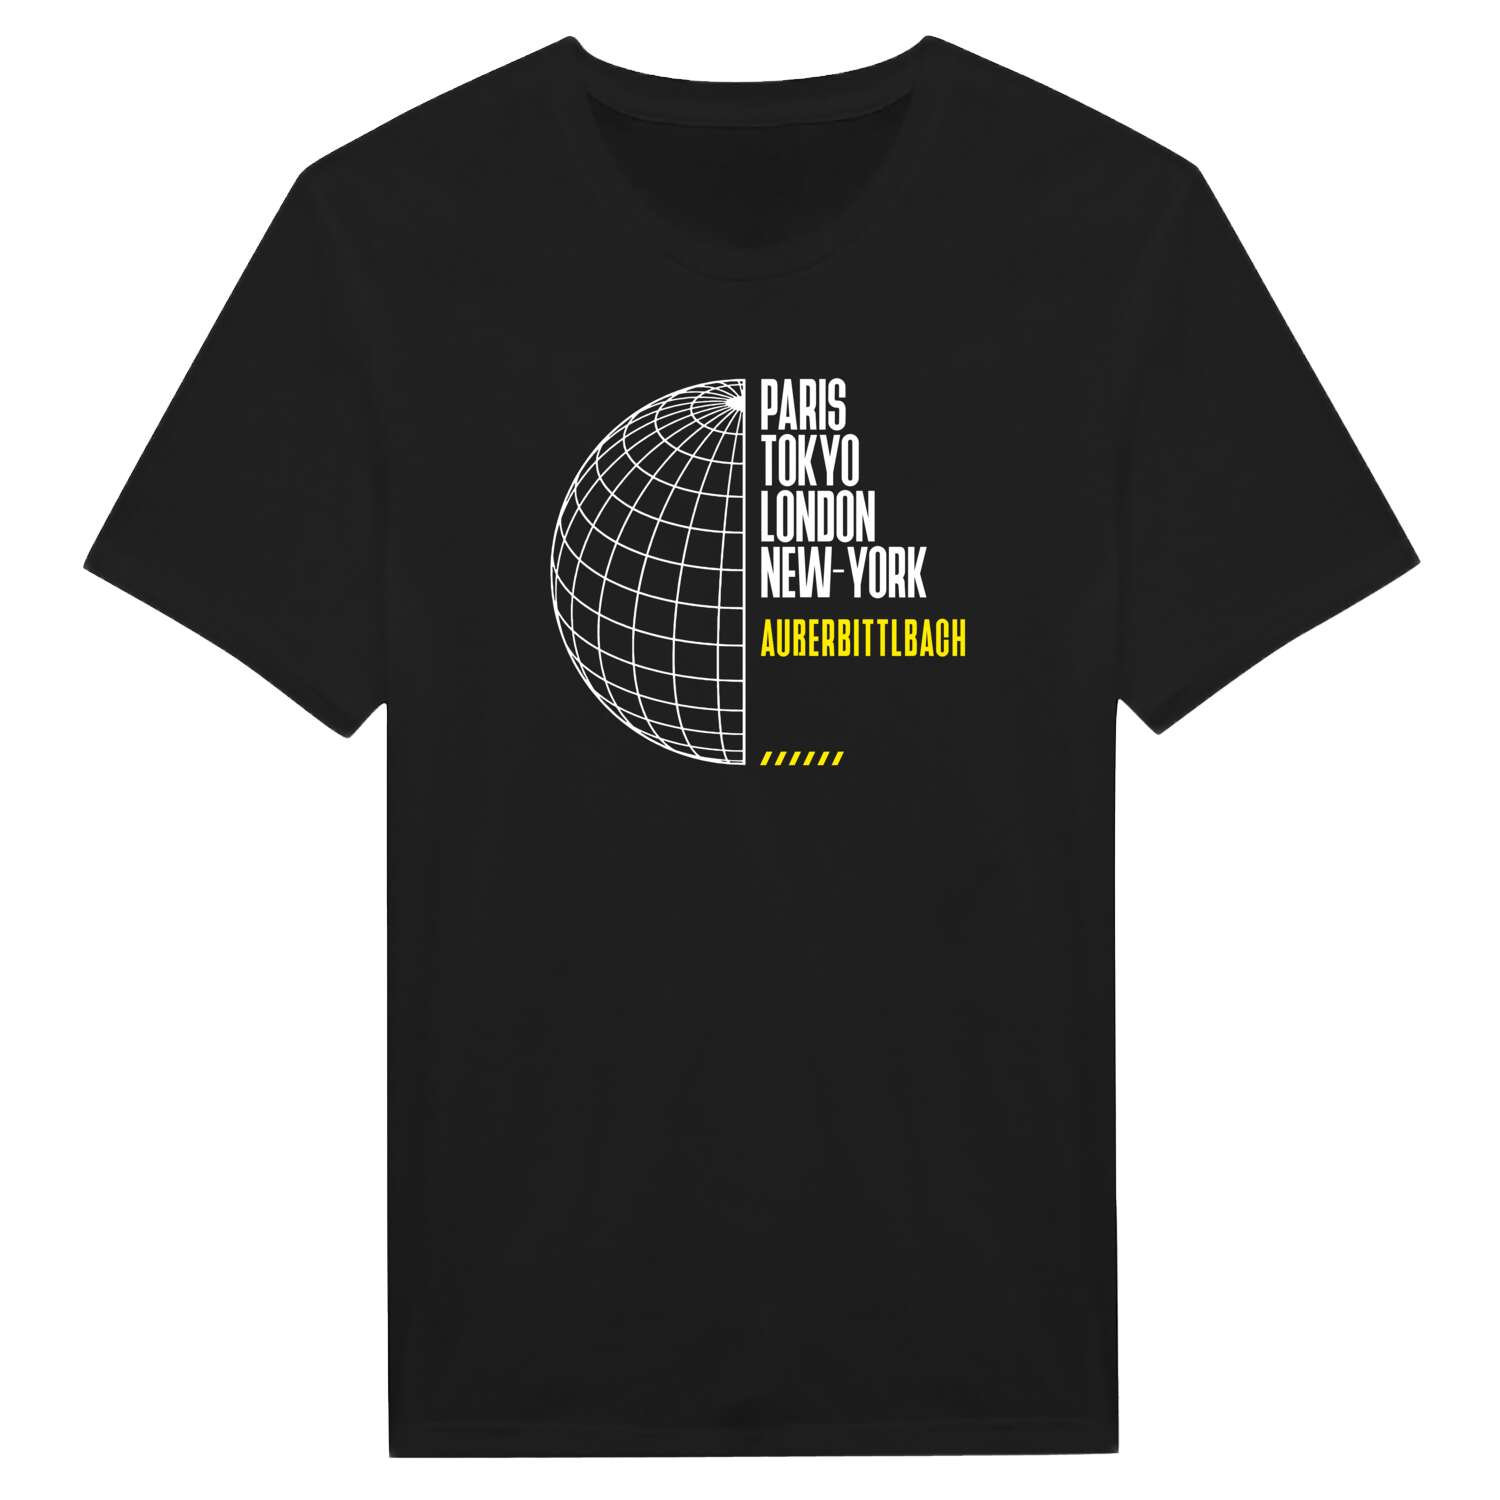 Außerbittlbach T-Shirt »Paris Tokyo London«